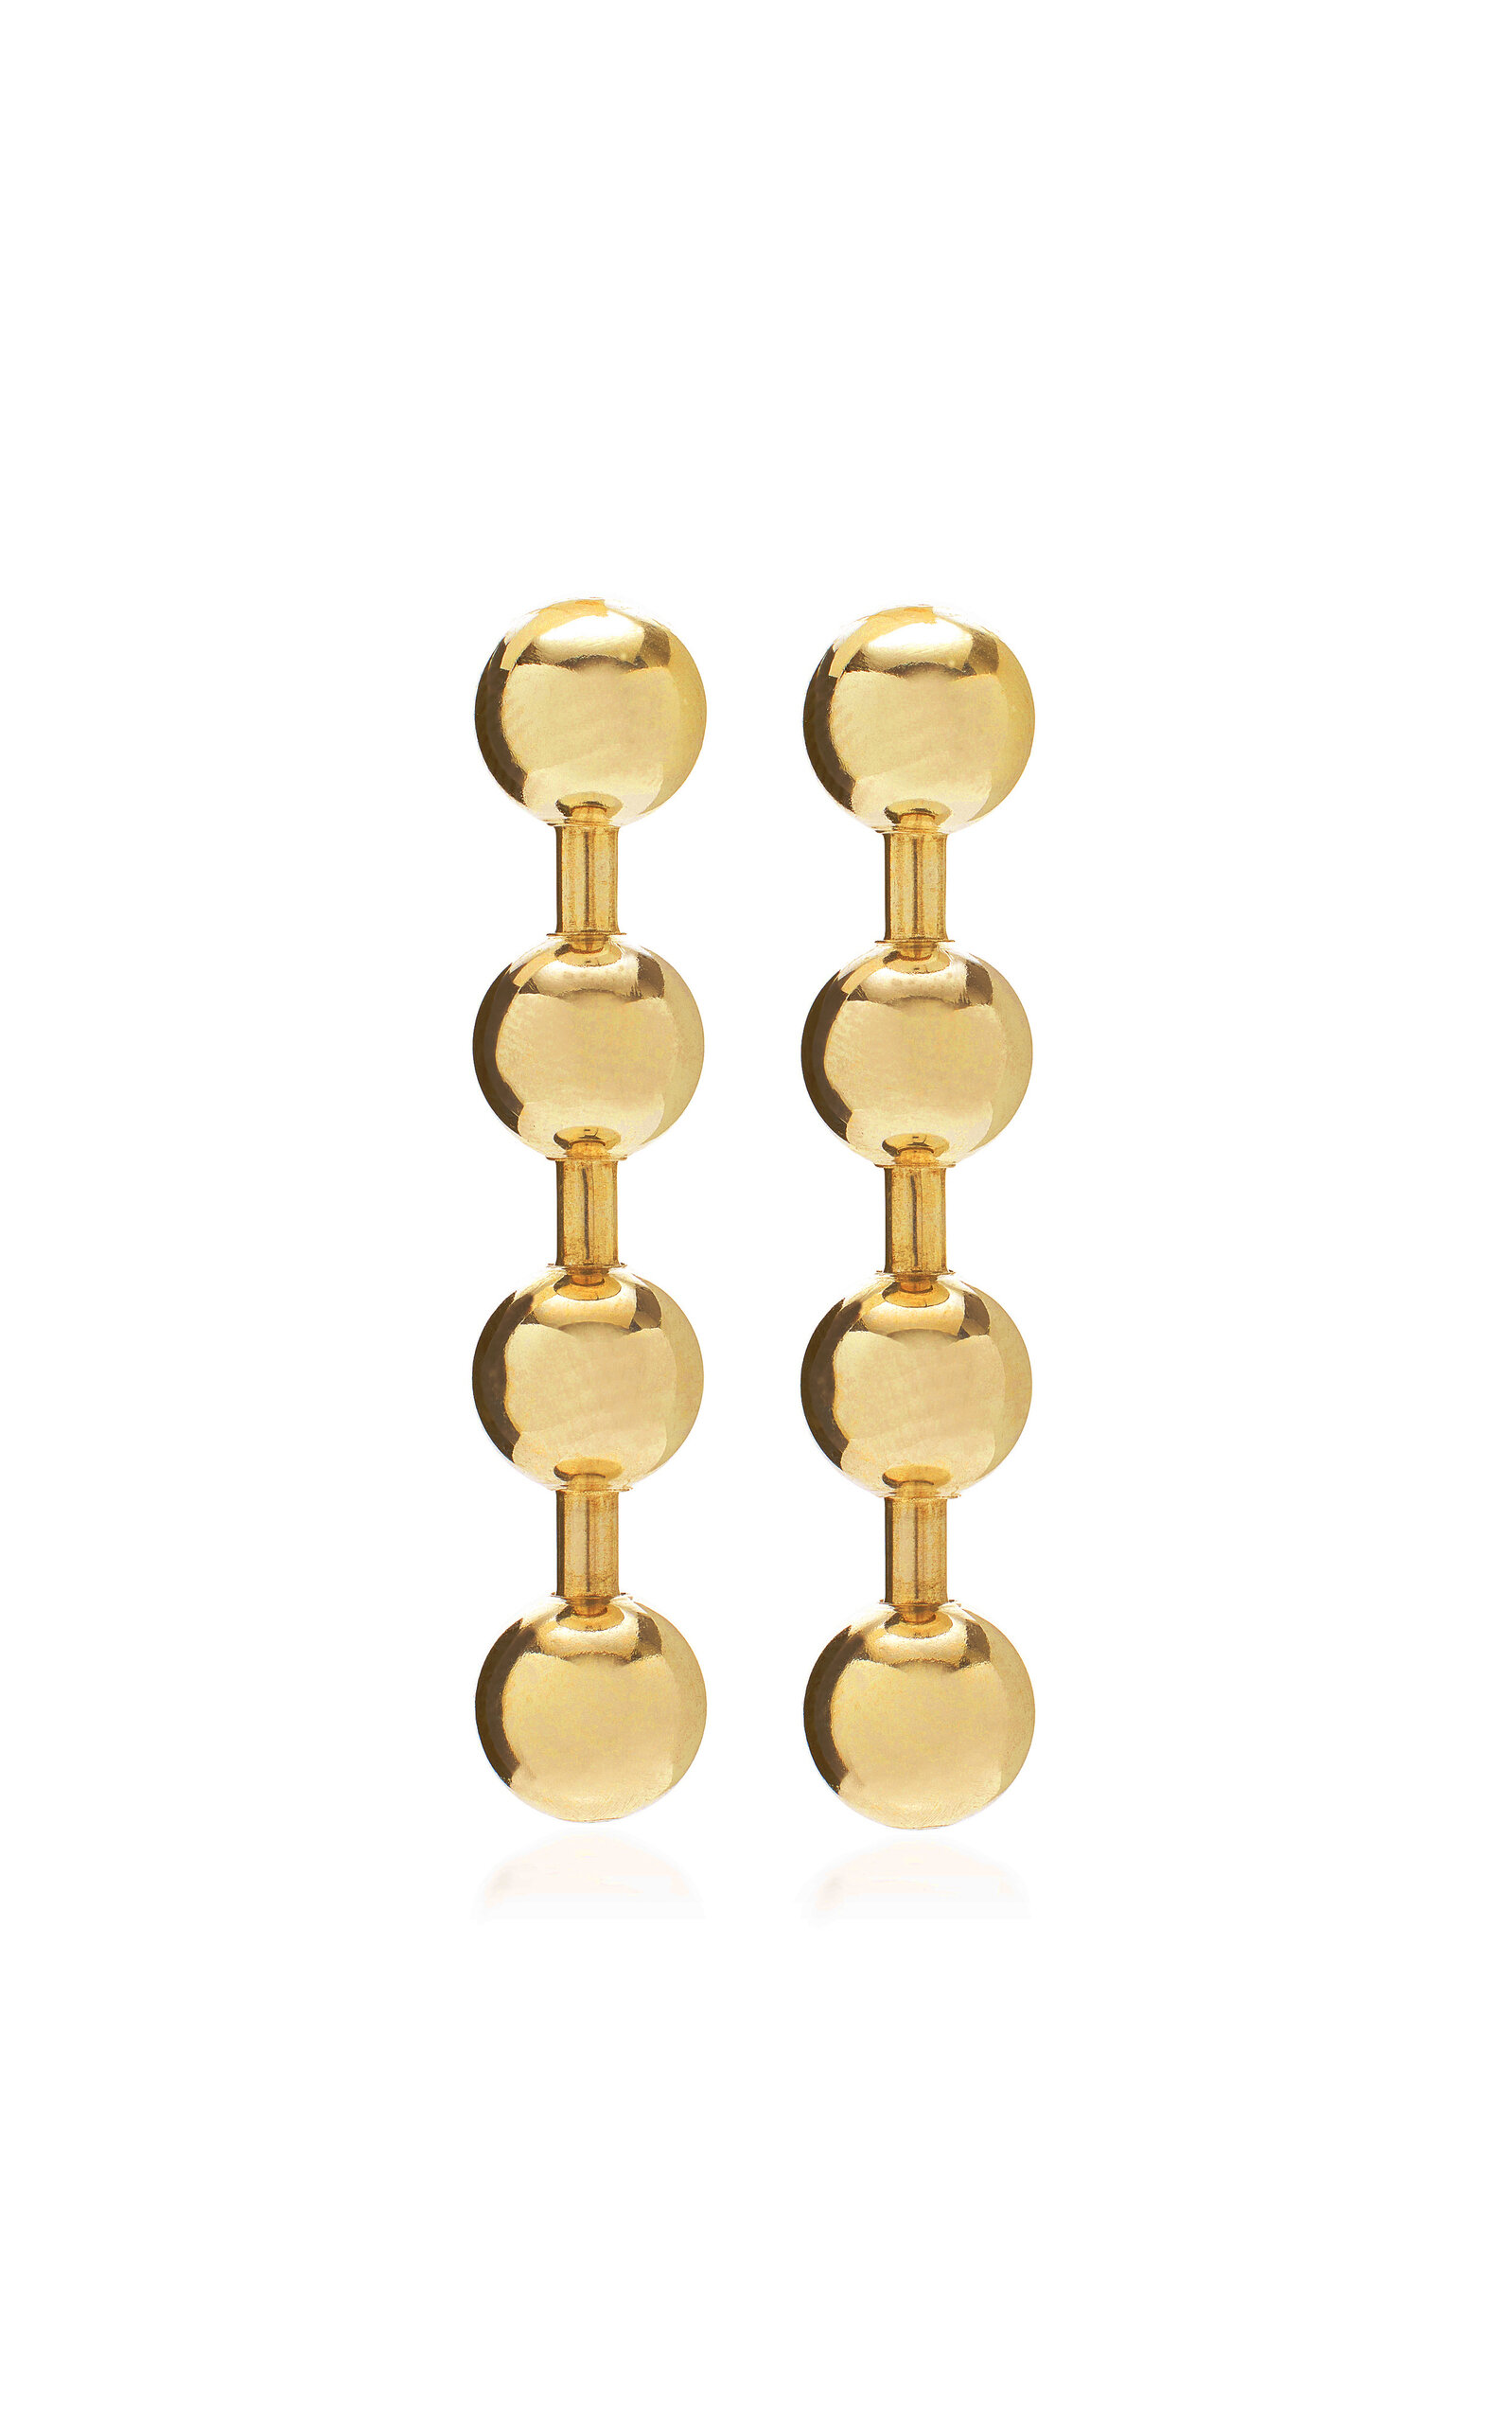 Martine Ali Exclusive Xl Ball 14k Yellow Gold Earrings